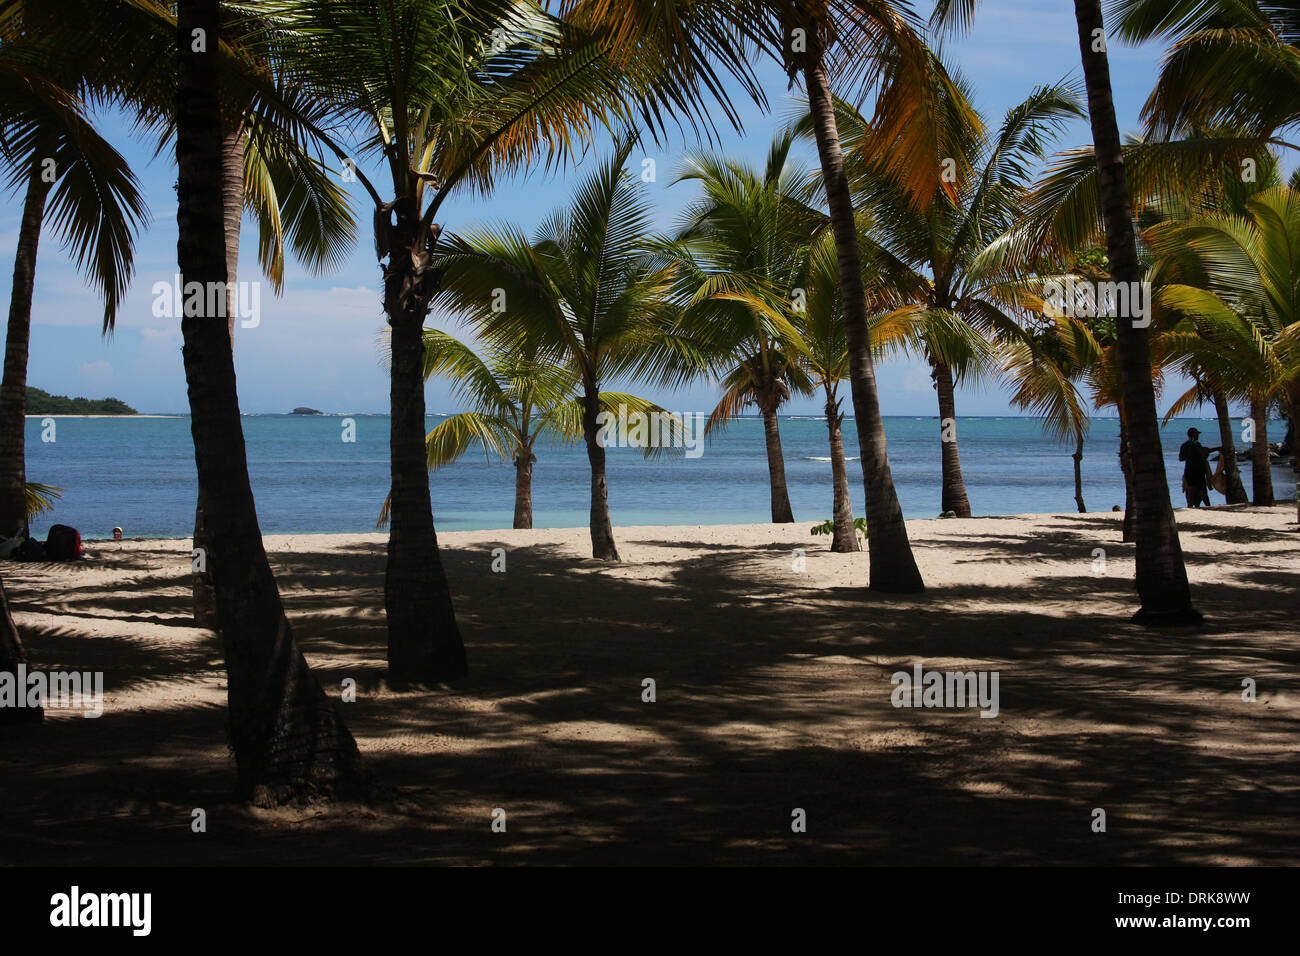 A paradise beach in Puerto Plata, Dominican Republic Stock Photo